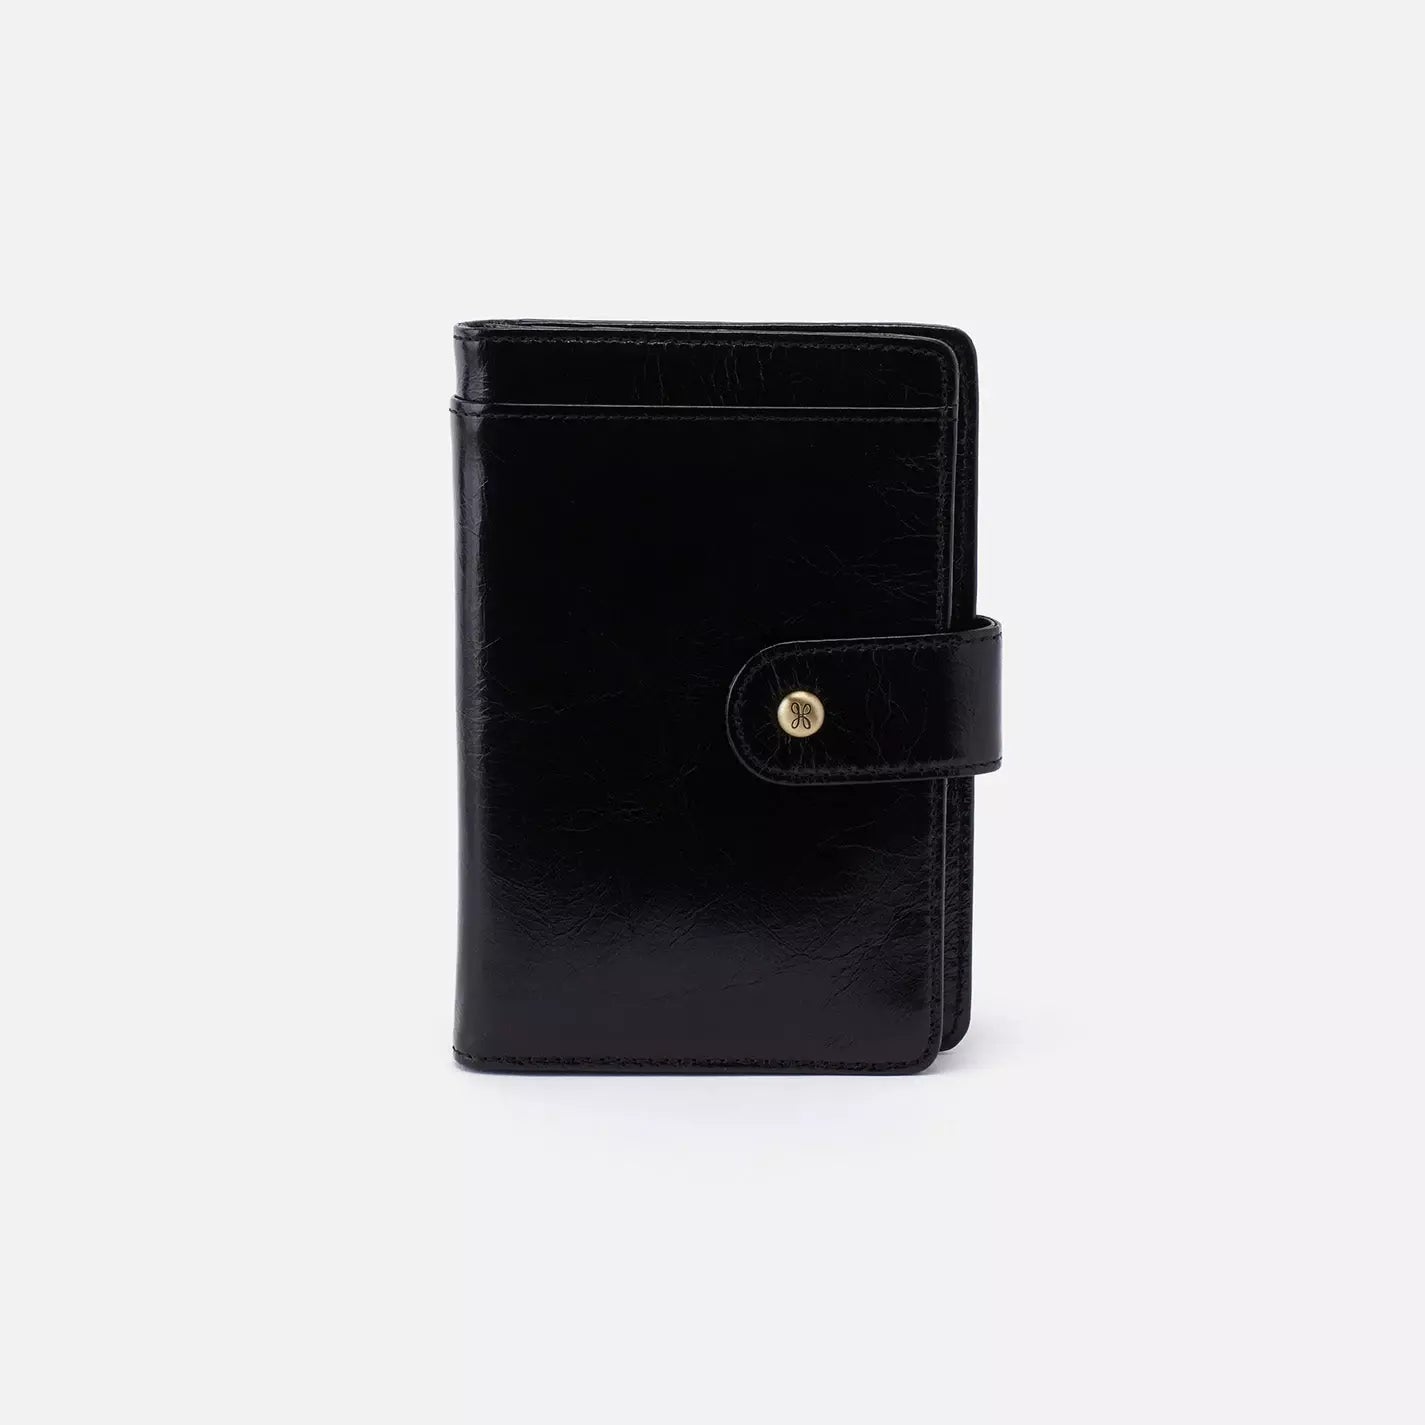 Vax Leather Compact Wallet in Vintage Hide - Black